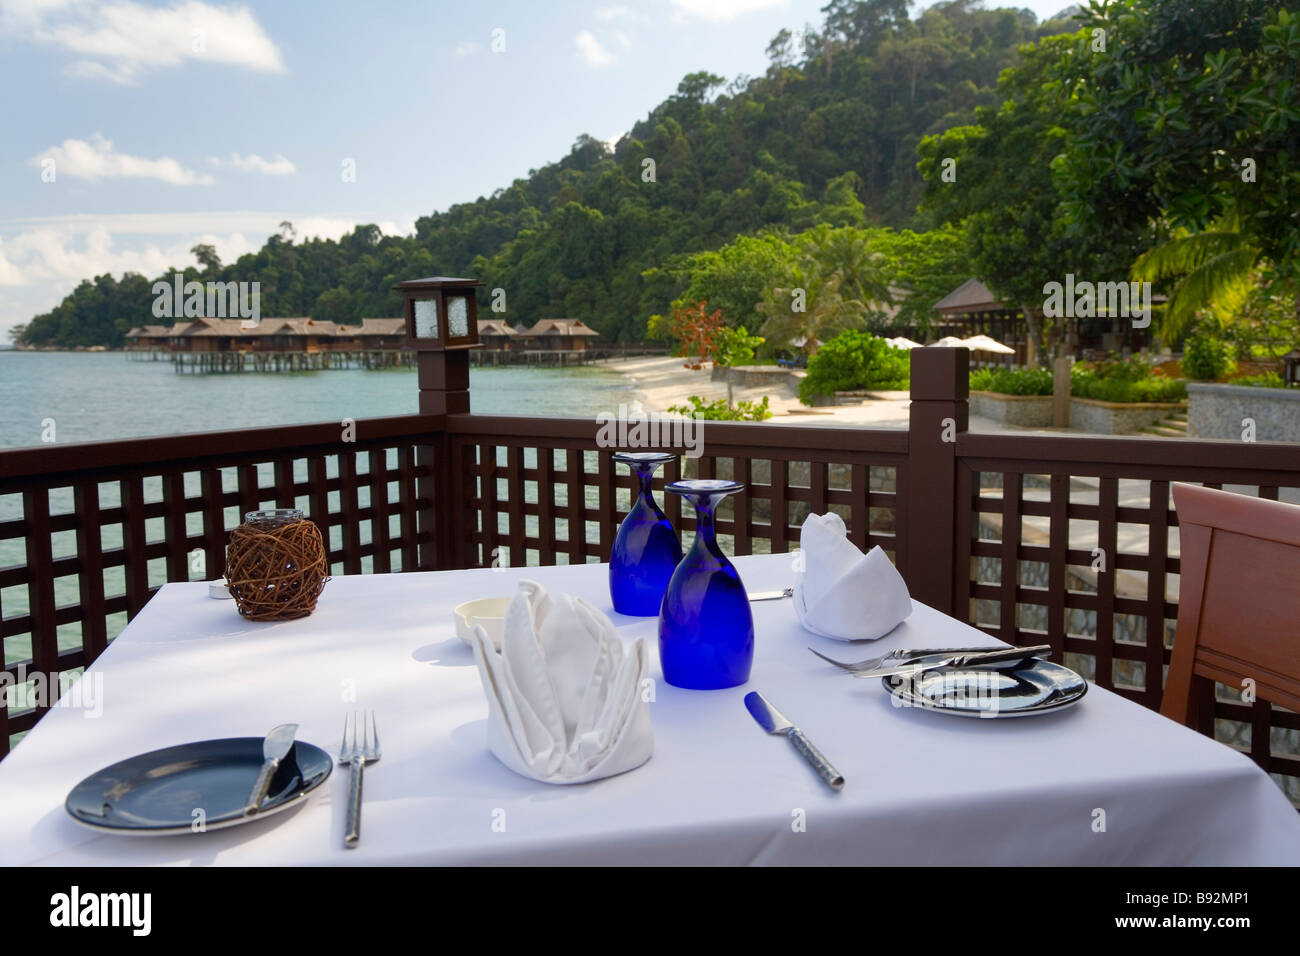 Dining table Palau Pangkor Laut, west coast, Malaysia Stock Photo